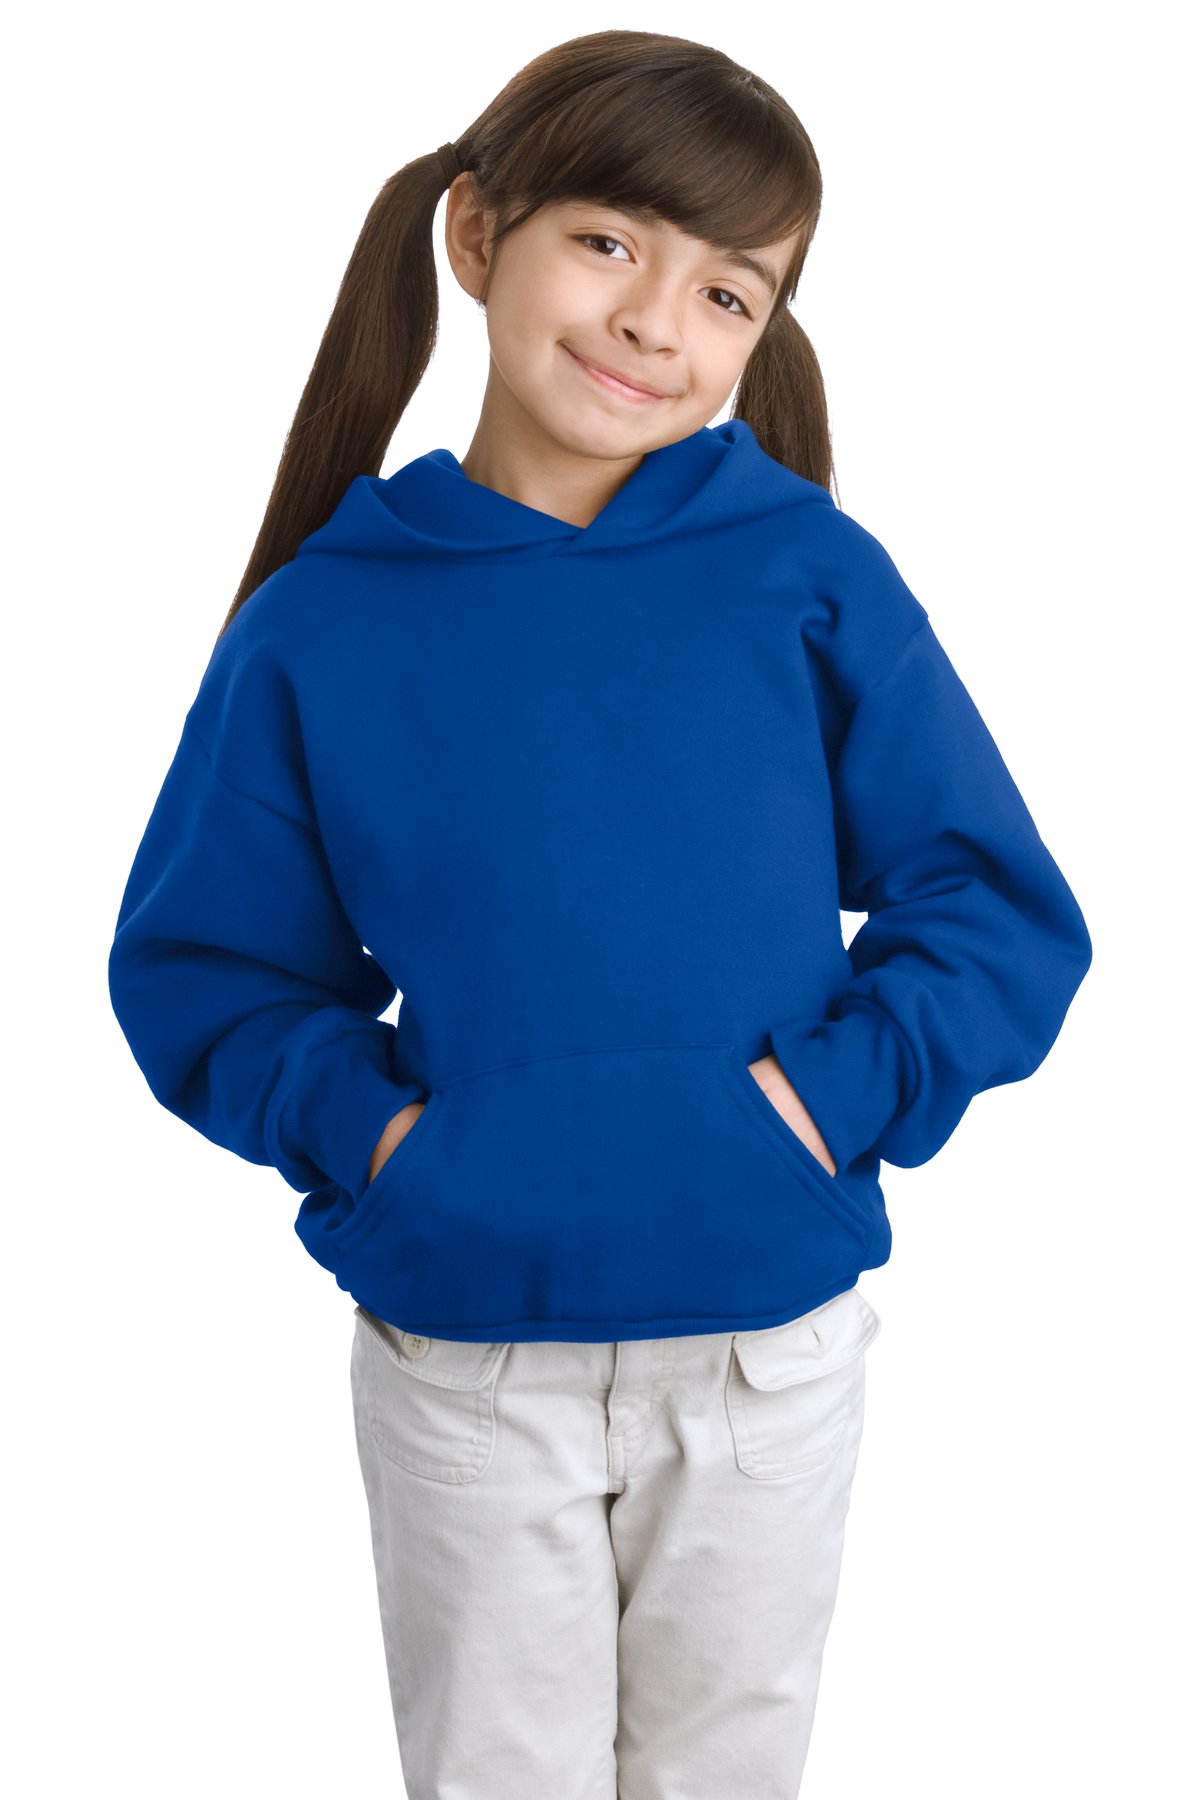 Hanes Girls Pullover Hooded Sweatshirt - P470 - image 1 of 1